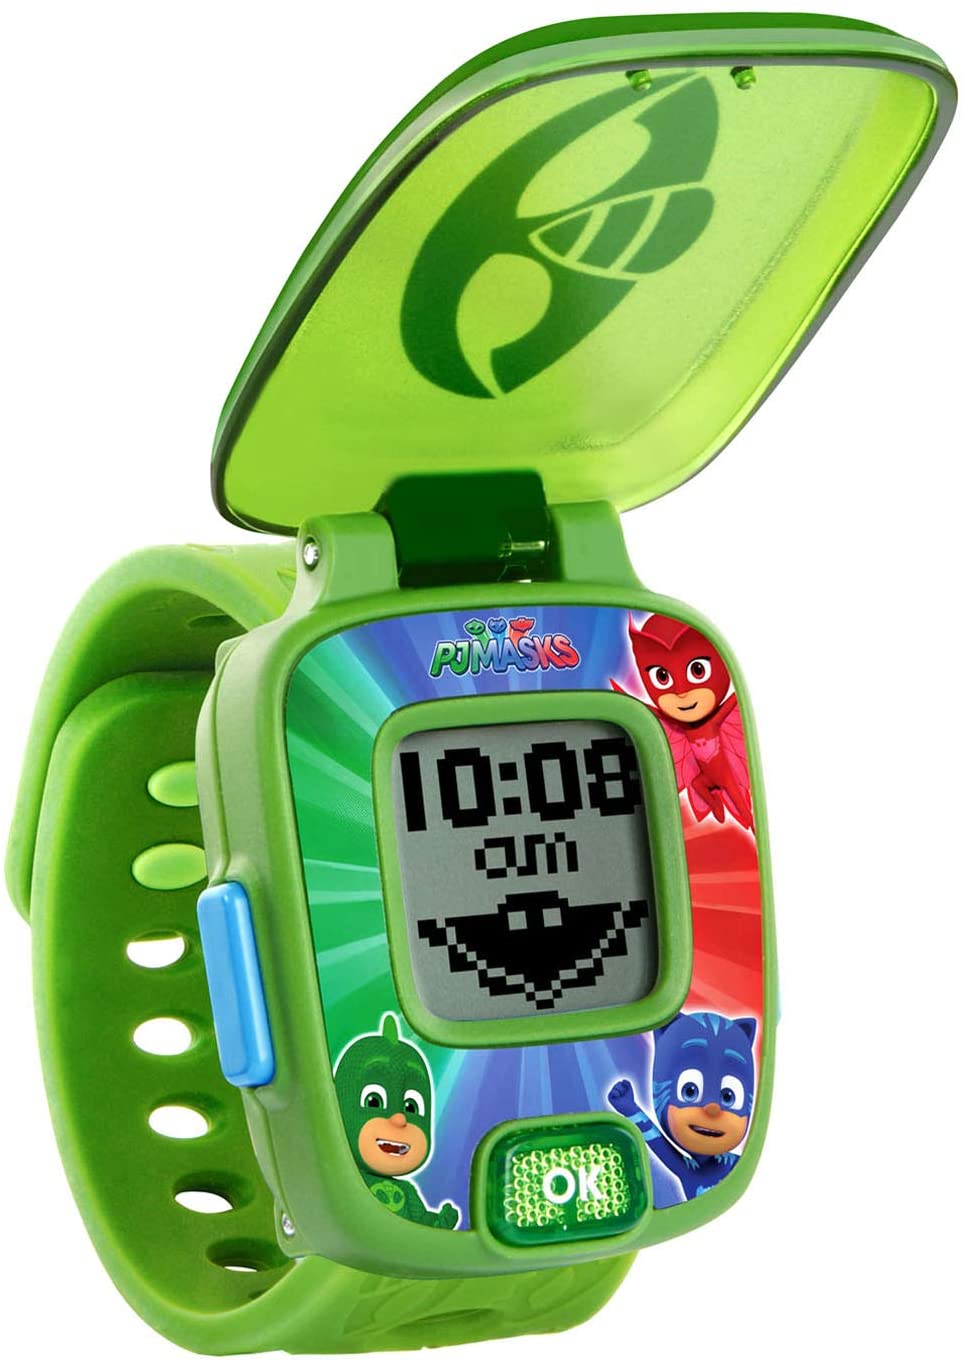 Đồng hồ VTech PJ Masks Super Gekko Super Owlette Learning Watch dành cho